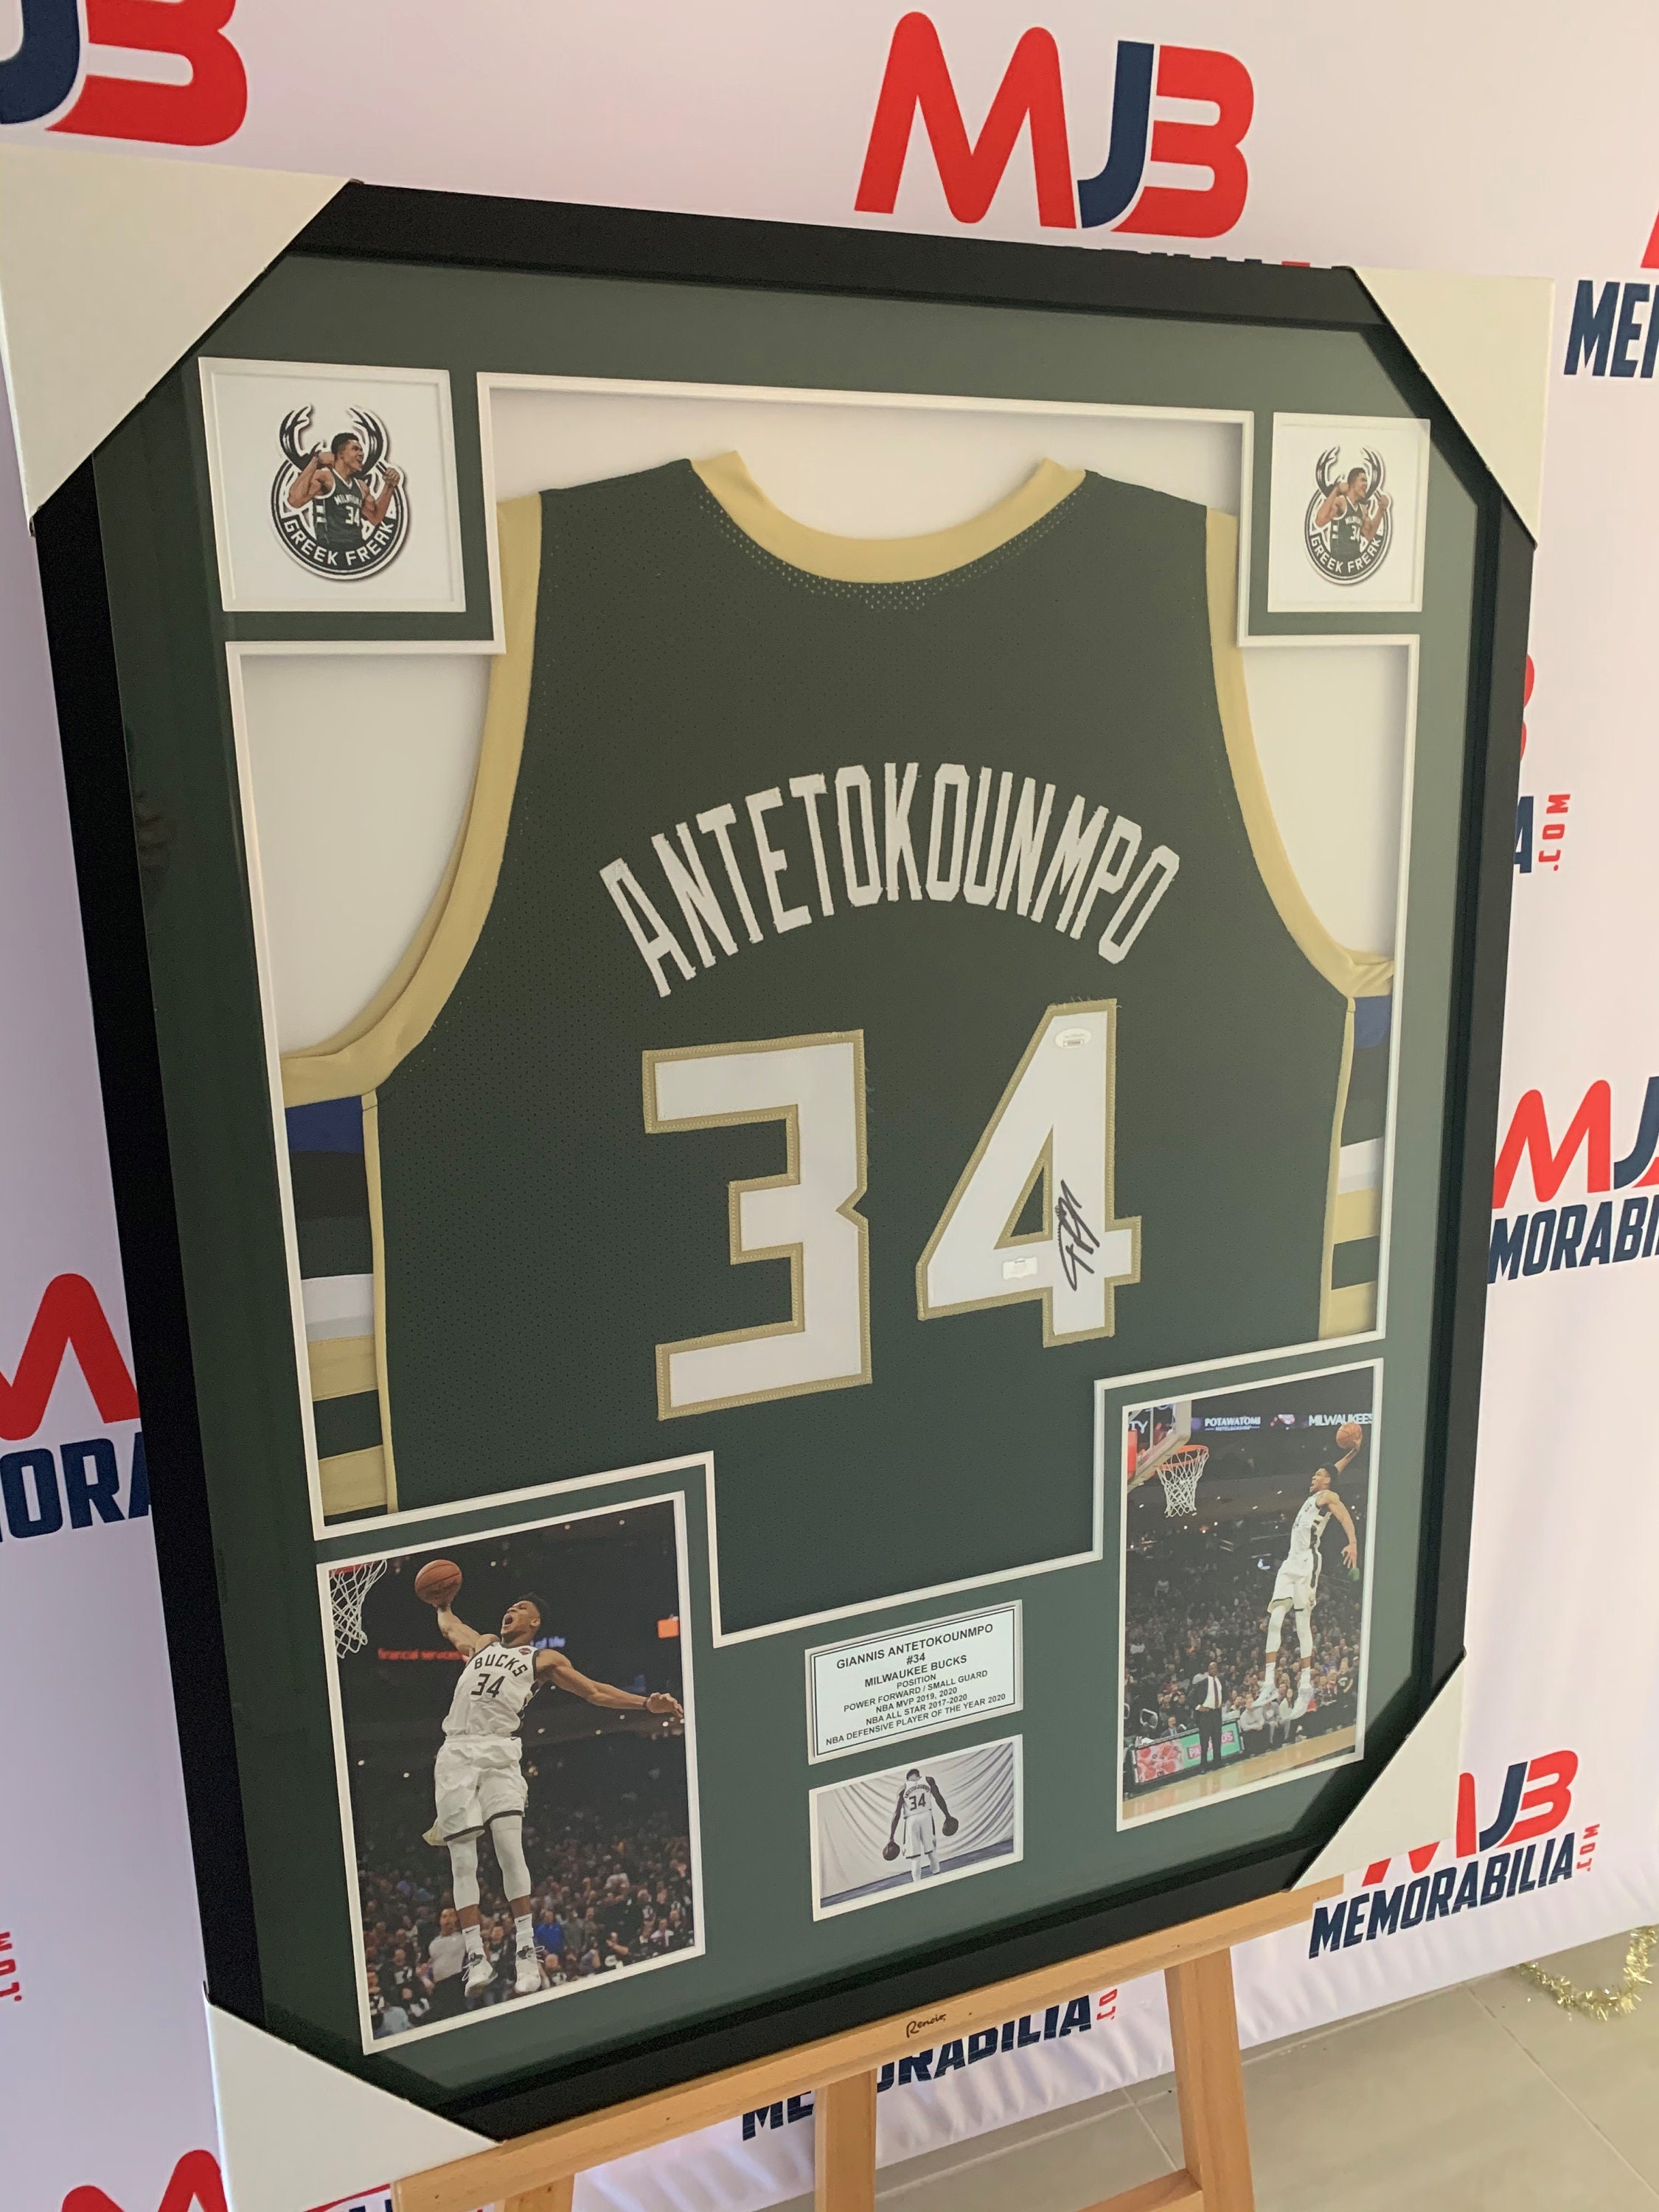 Giannis Antetokounmpo Autographed Milwaukee Bucks Jersey Framed